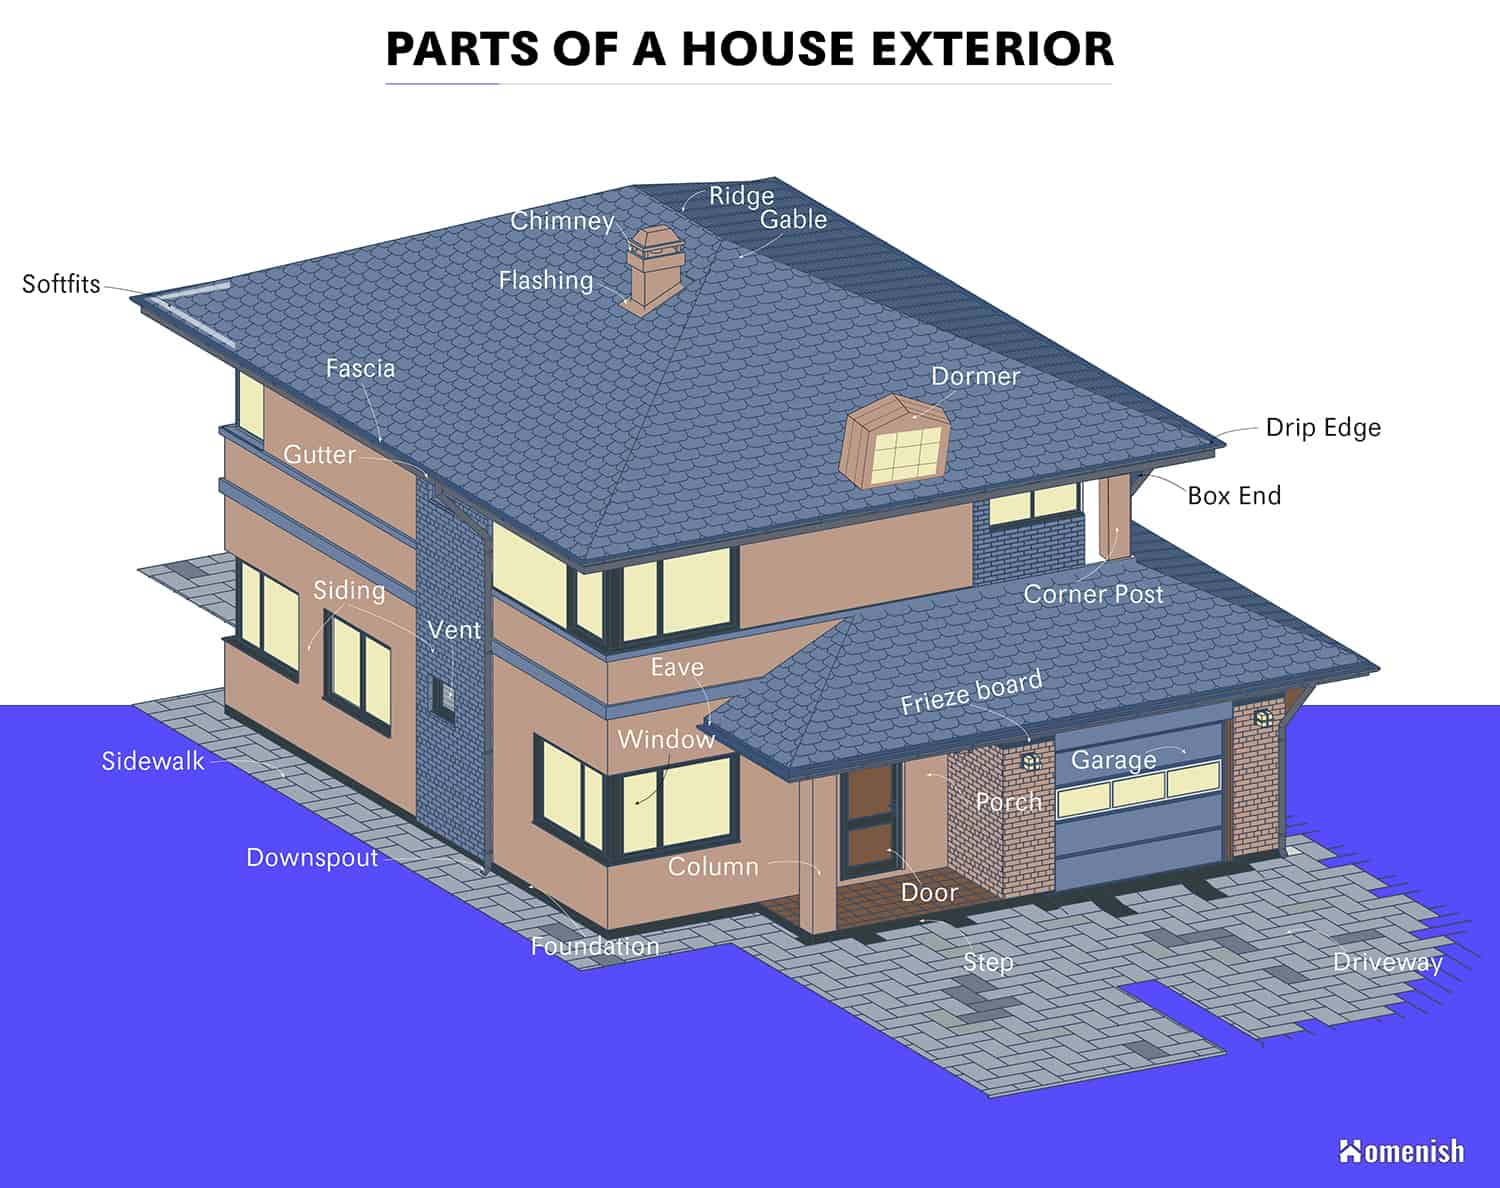 Parts of a House Exterior Diagram